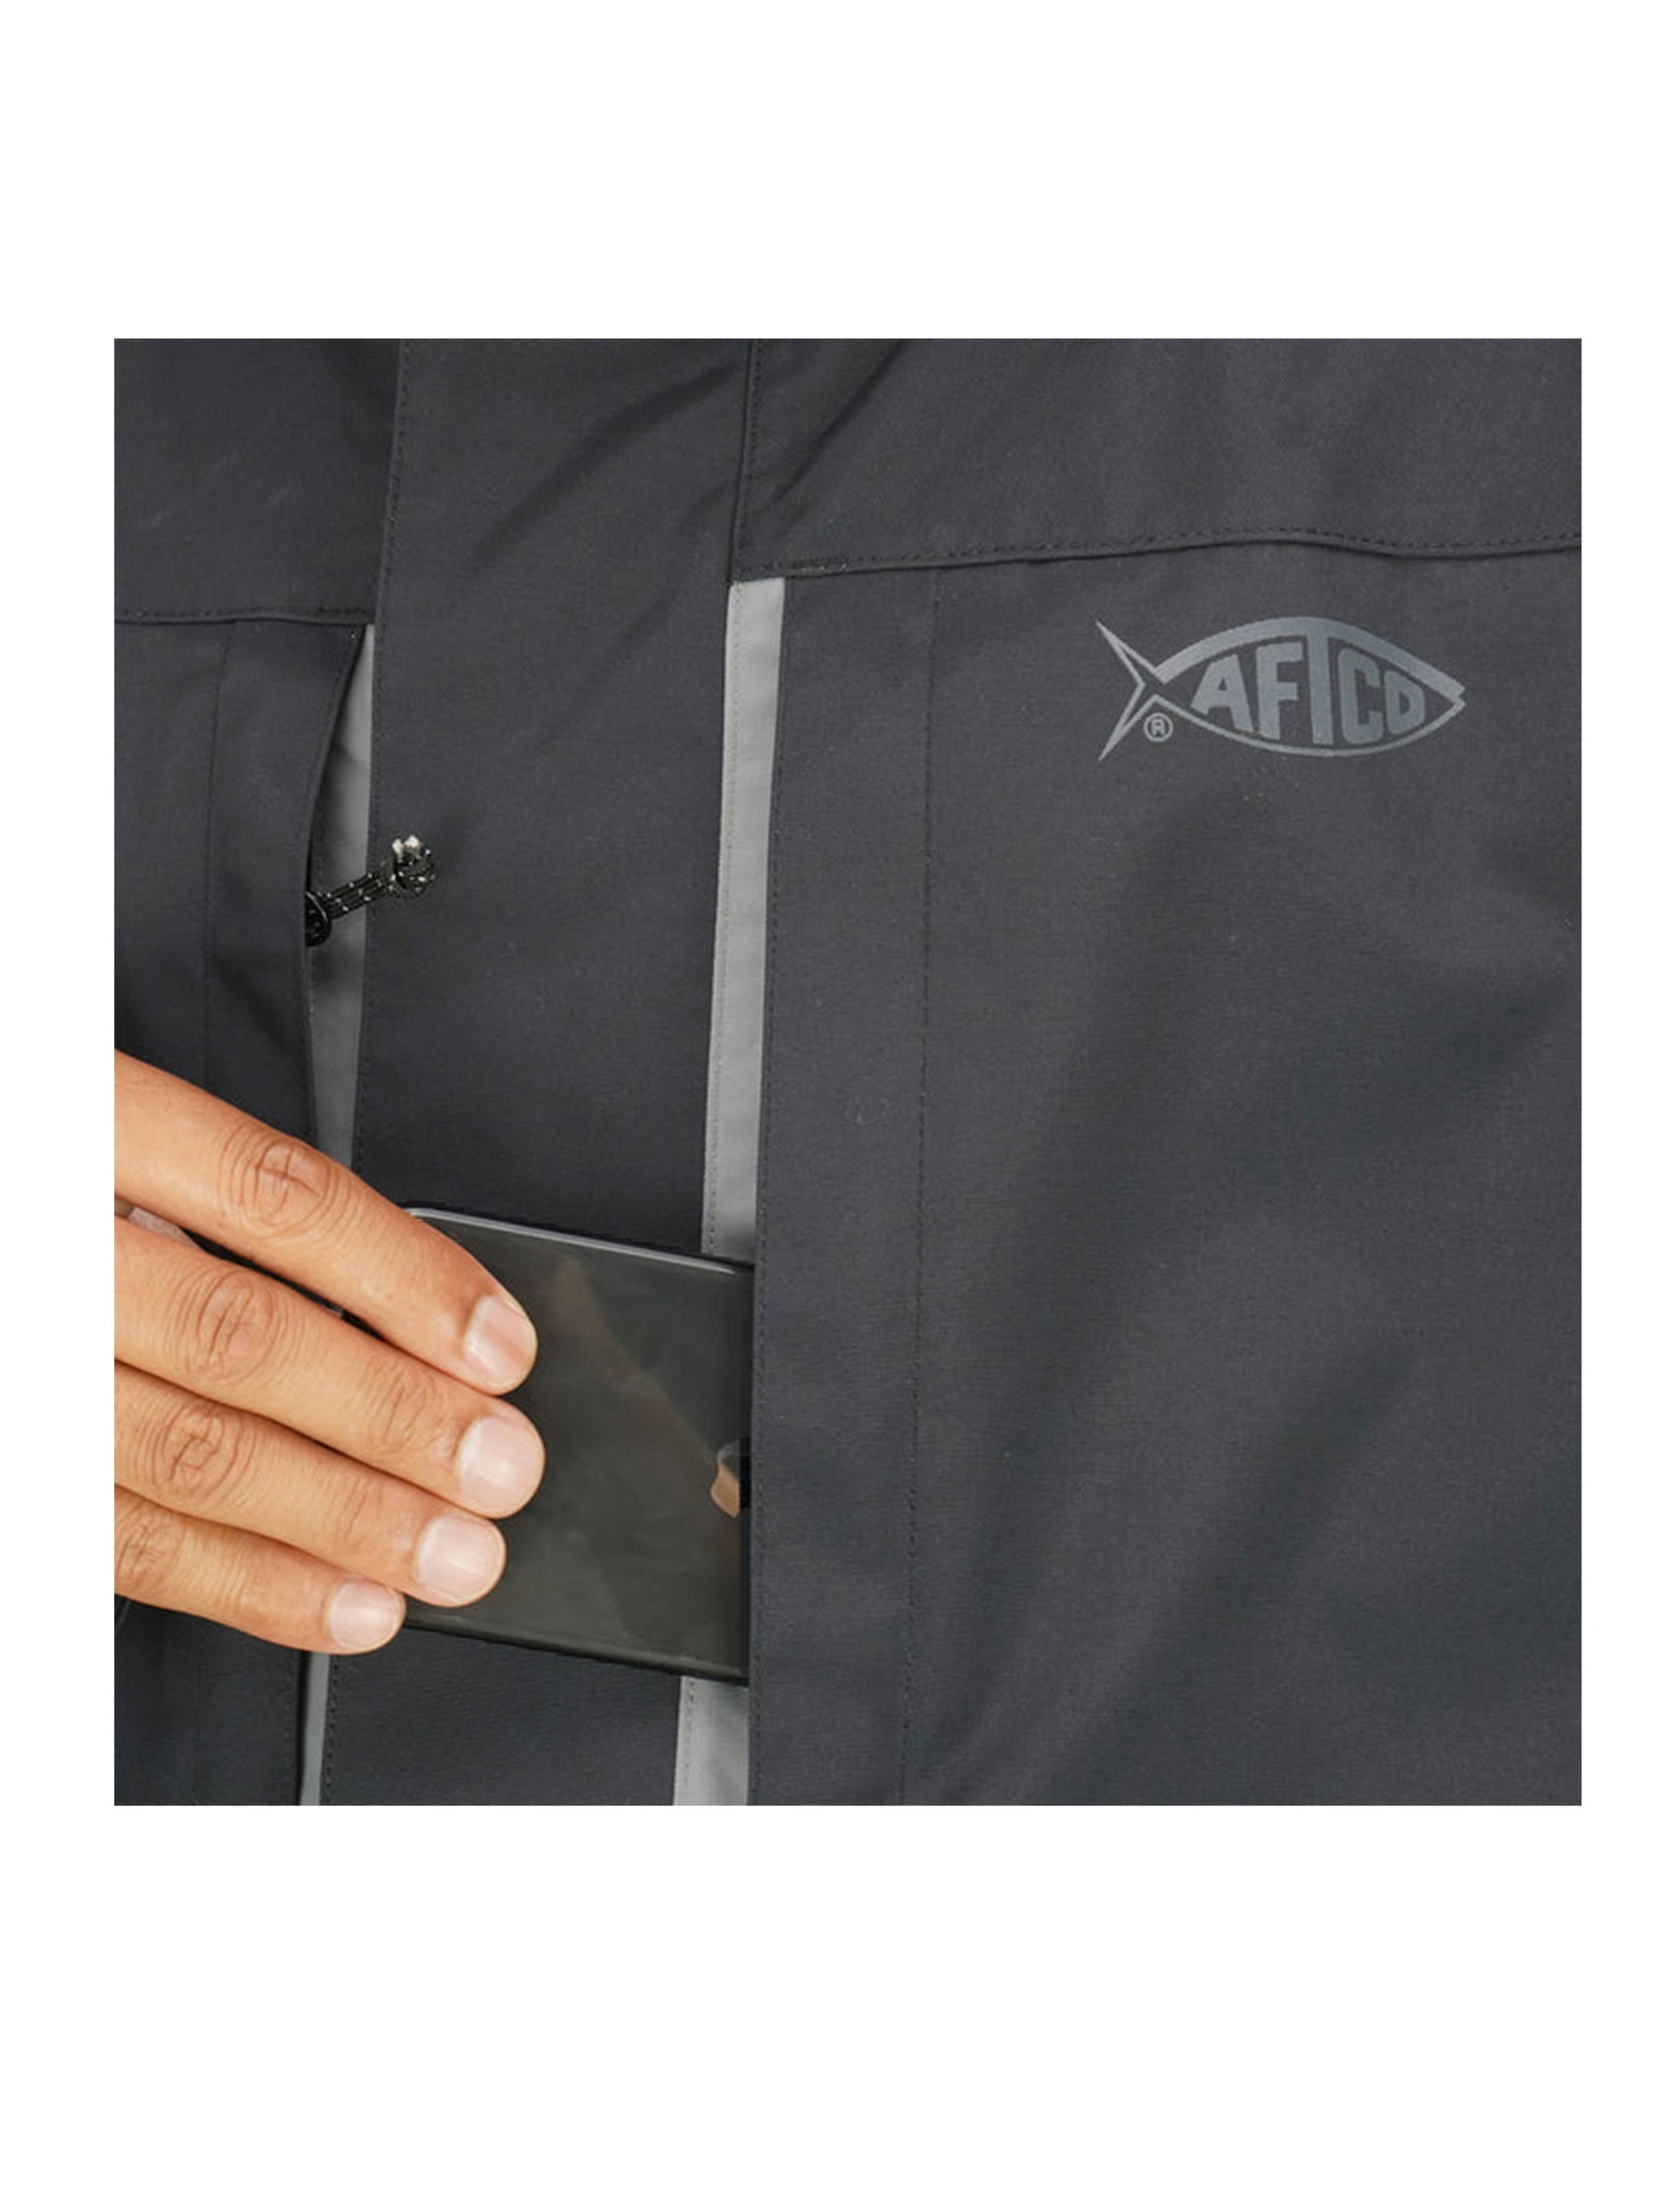 VEXUS® / AFTCO Black Transformer Packable Pants